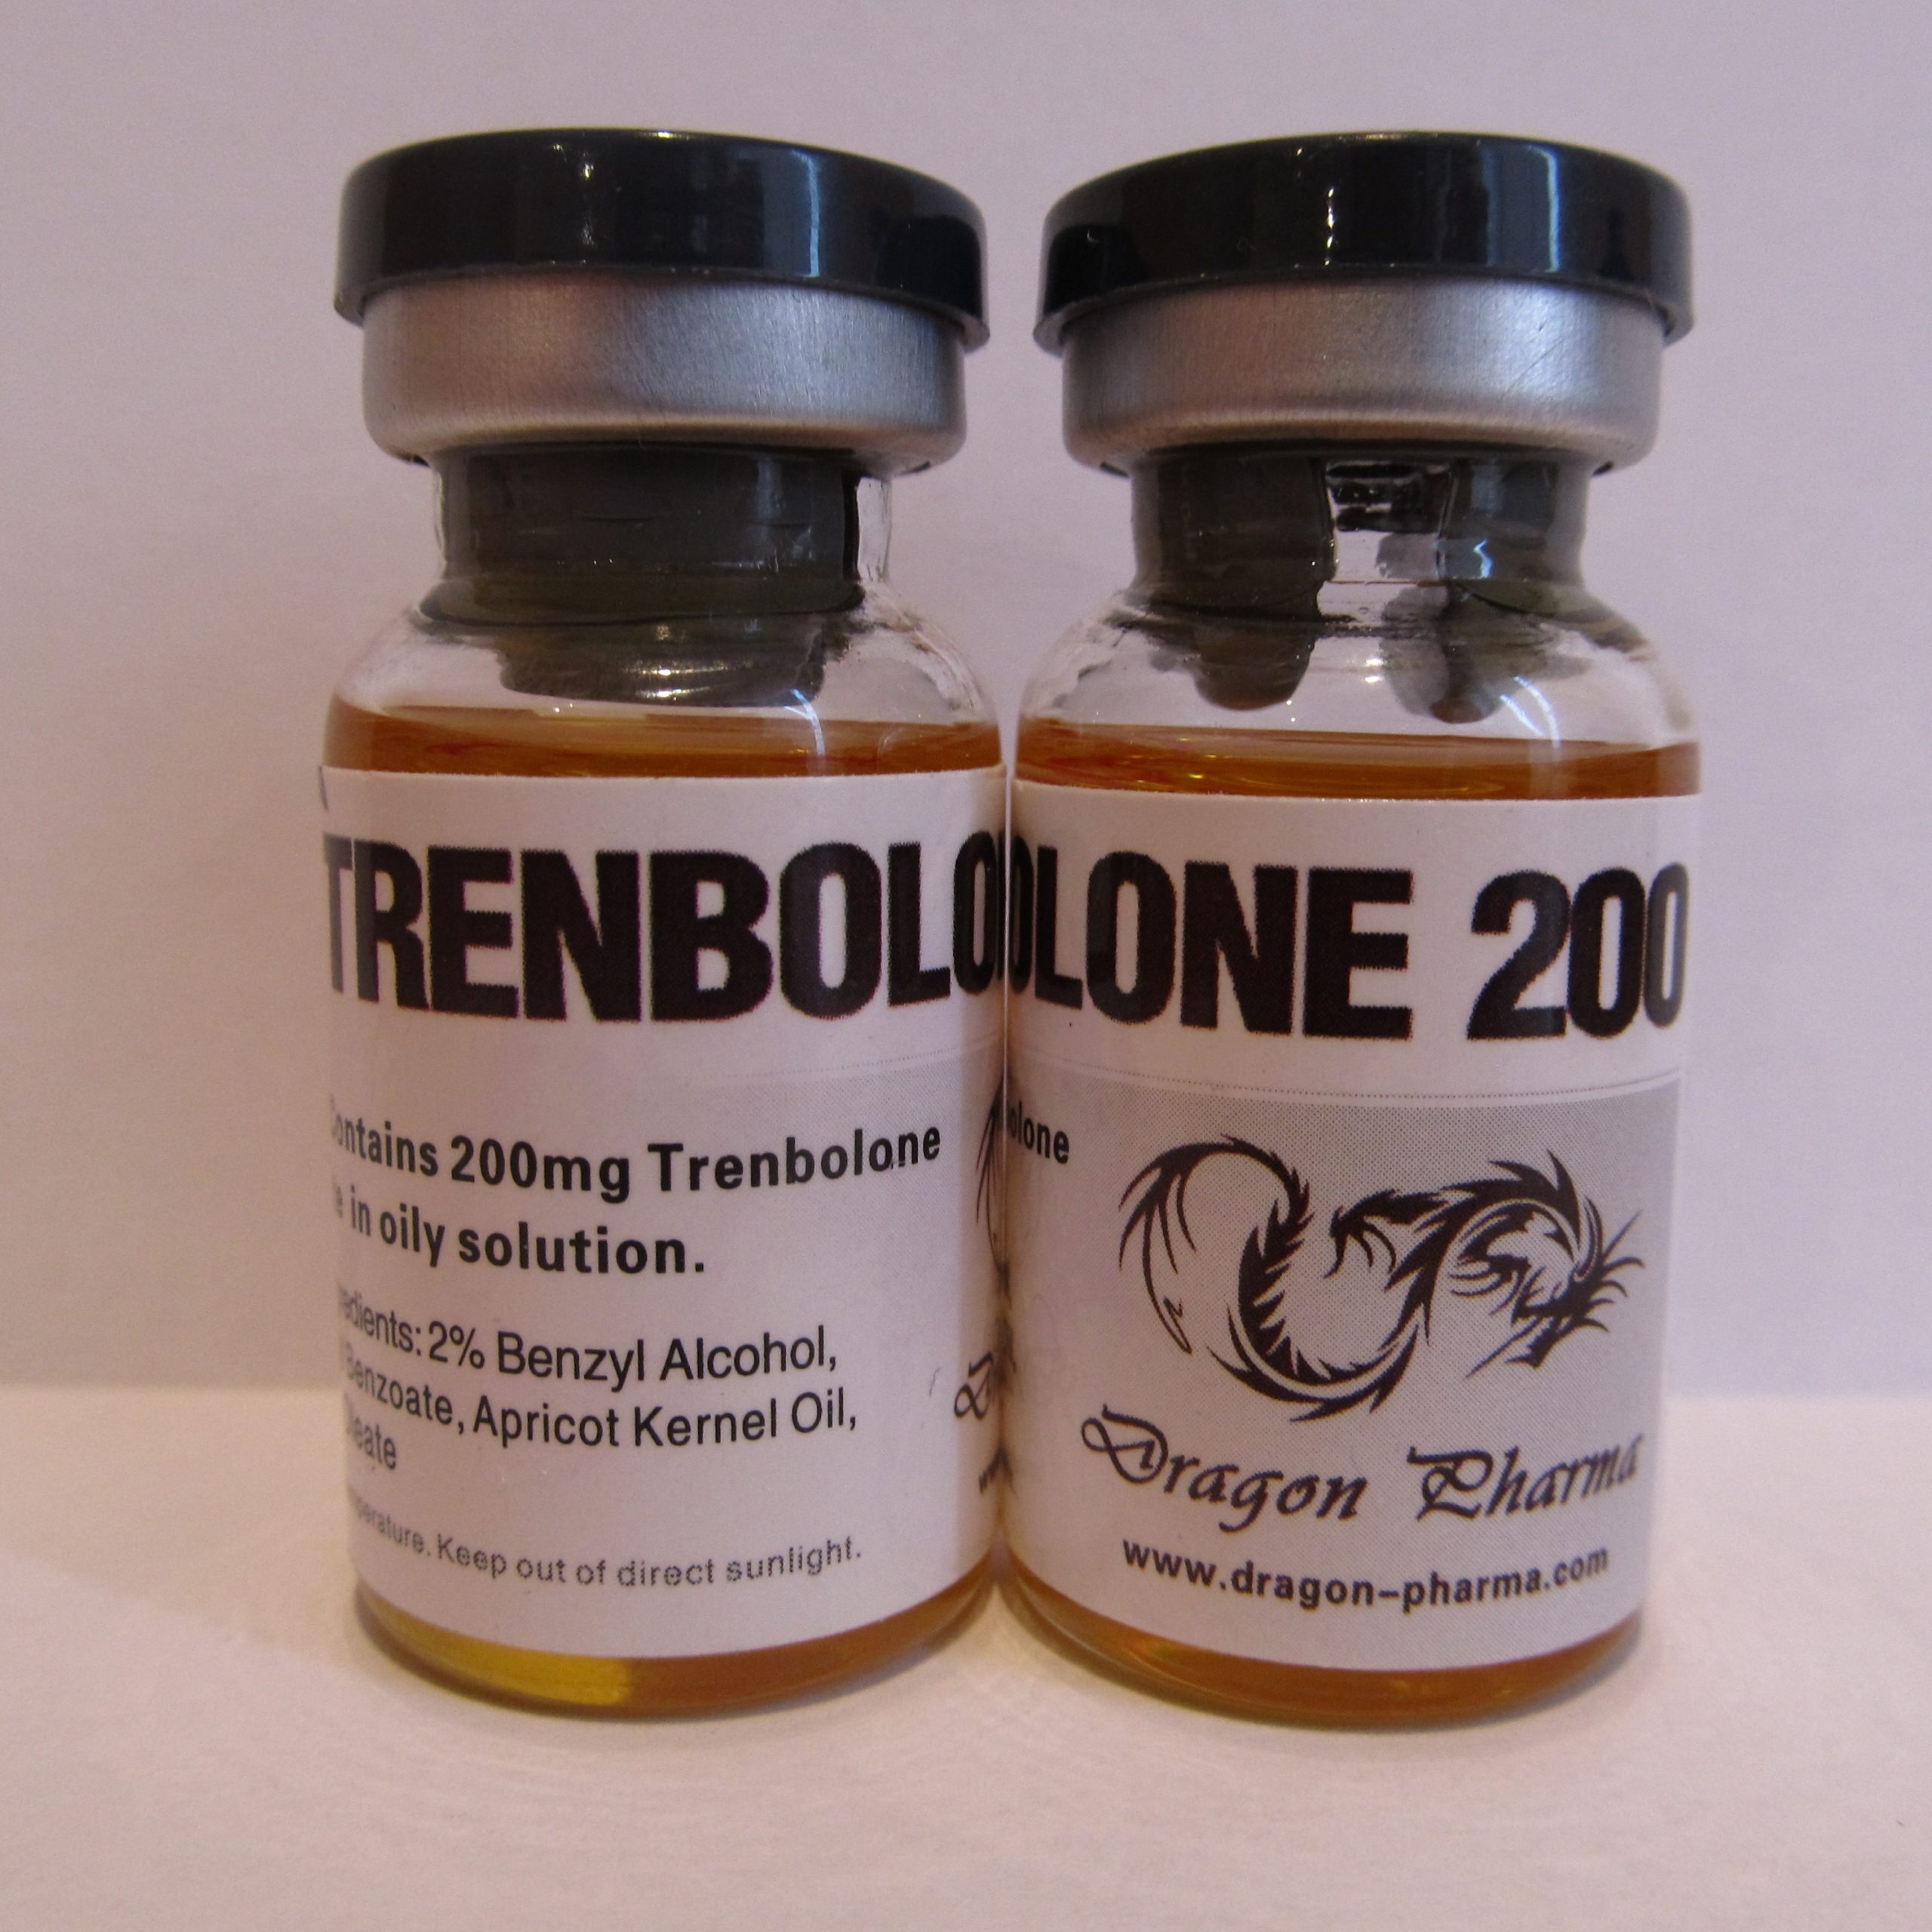 Trenbolone 200 (Trenbolone Enanthate)